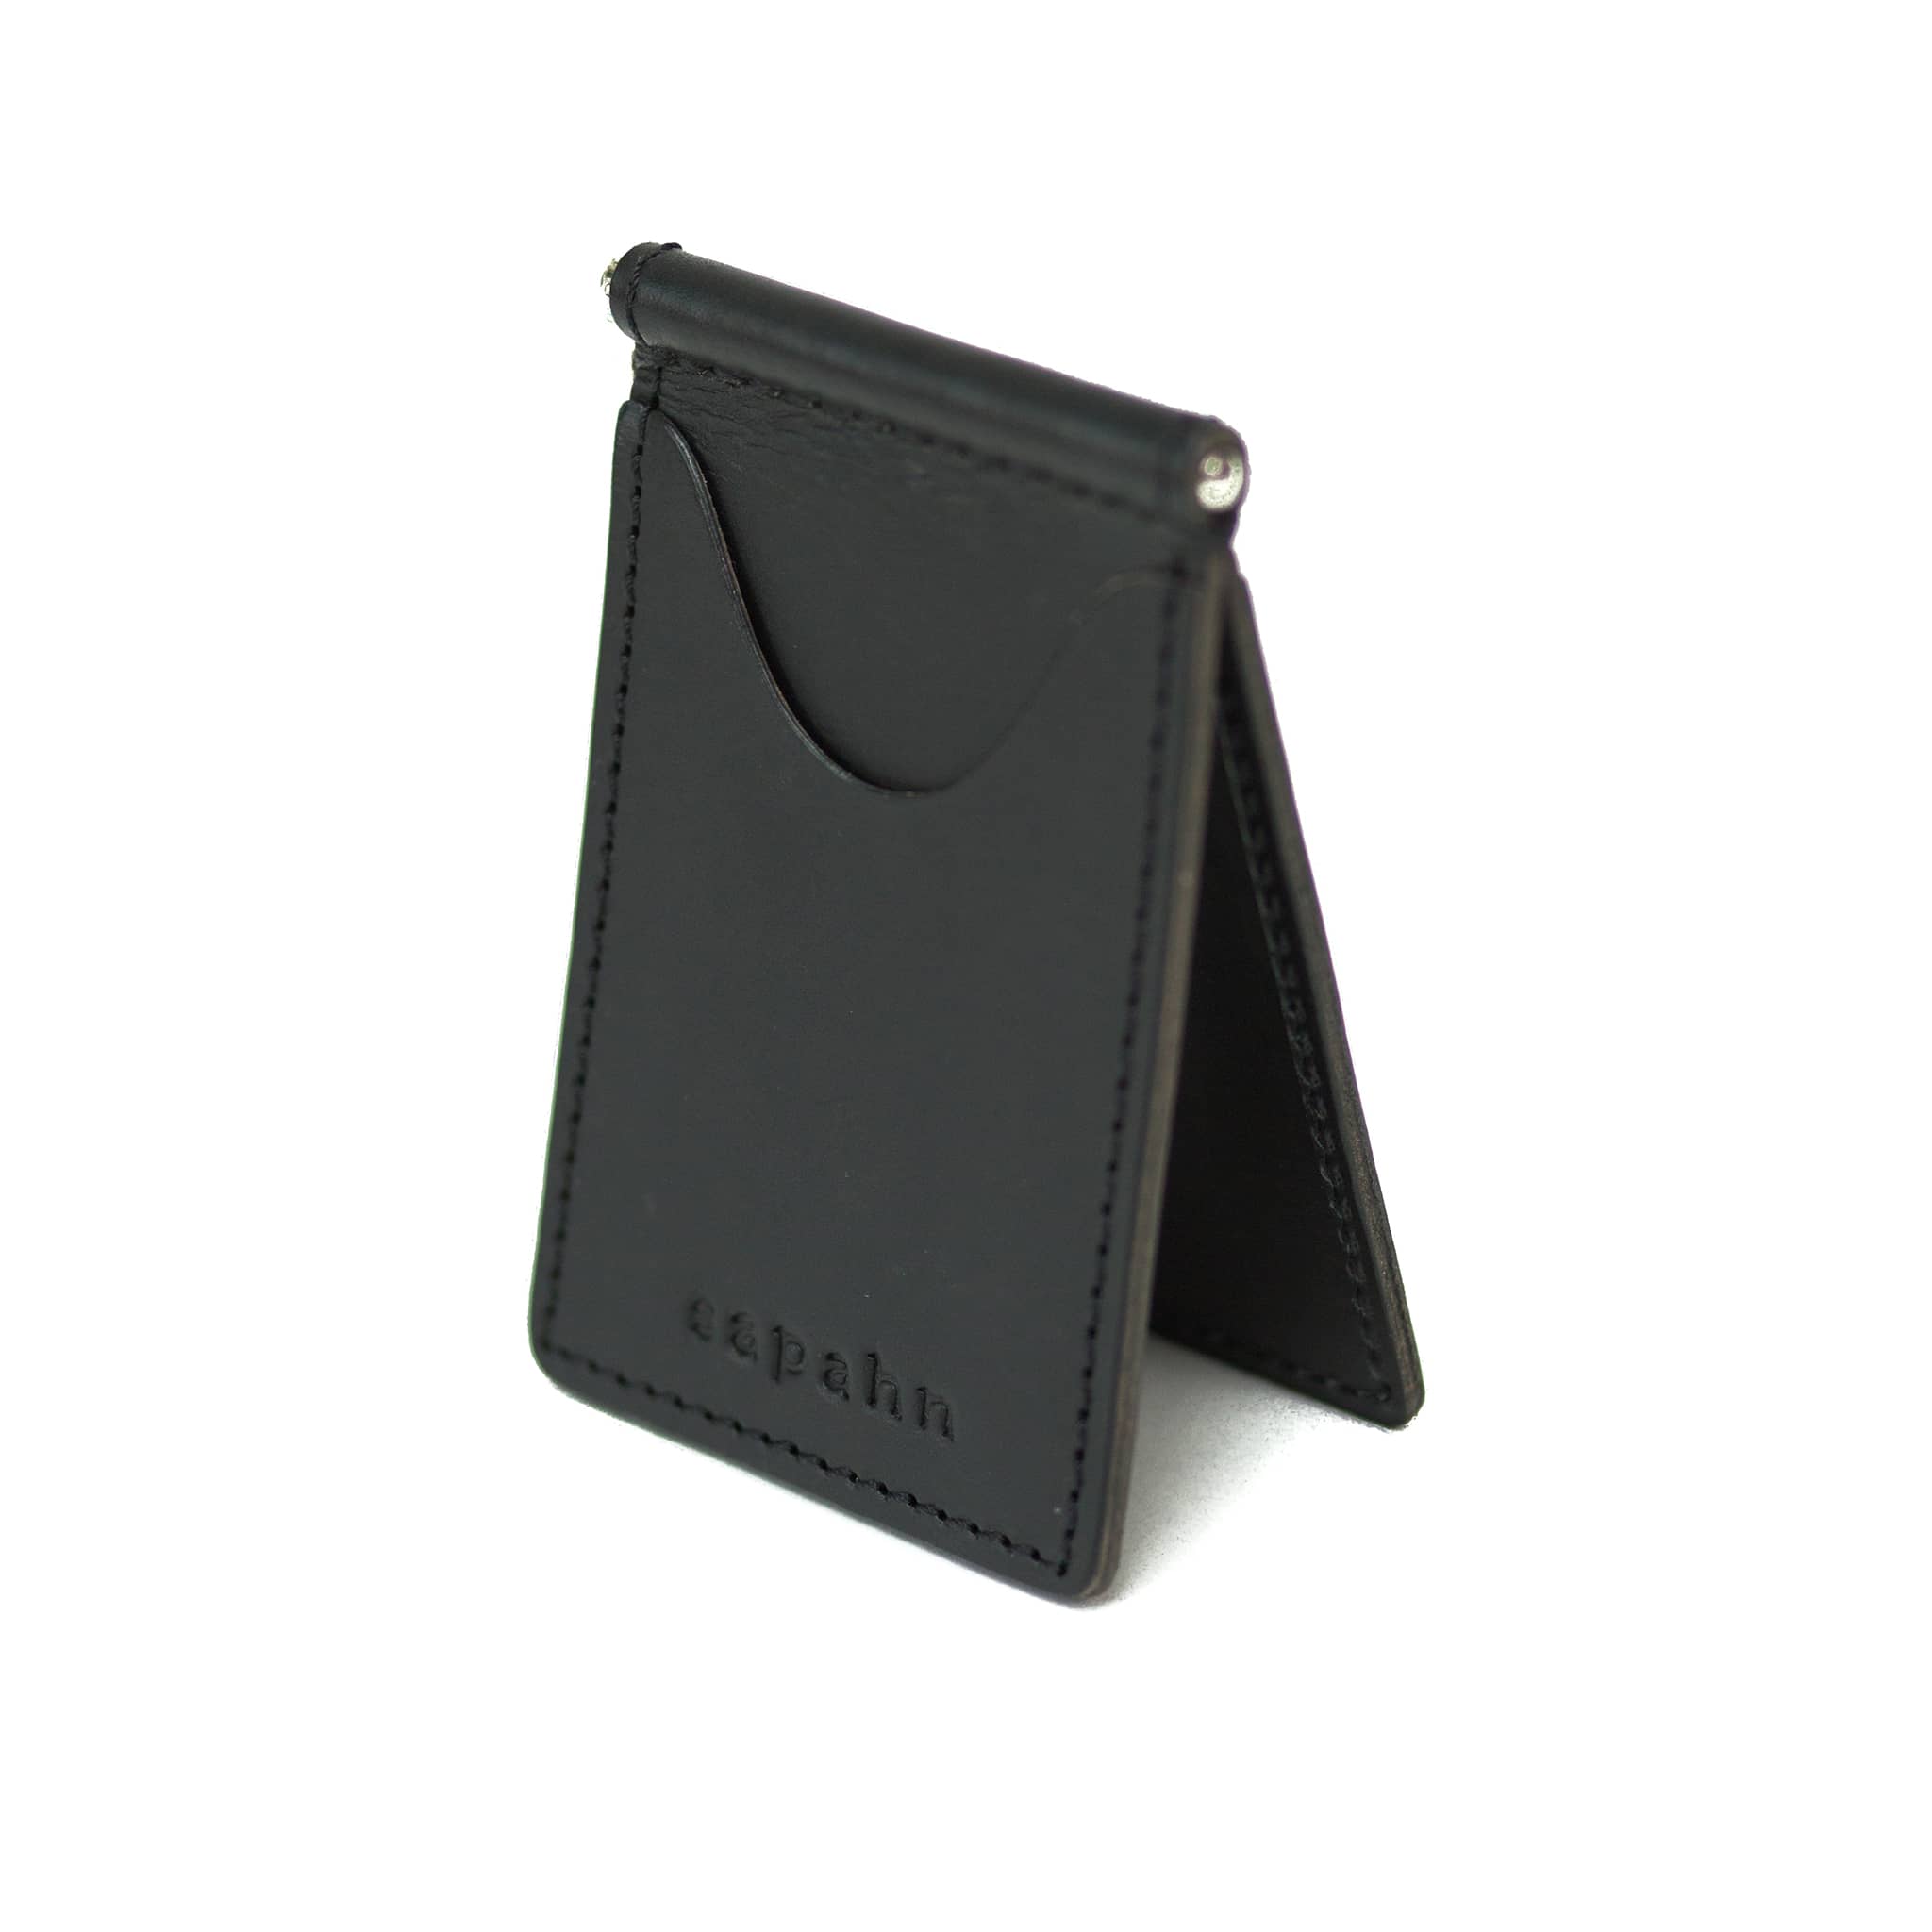 Black leather Dale money clip features exterior card slots and a subtle Sapahn logo.